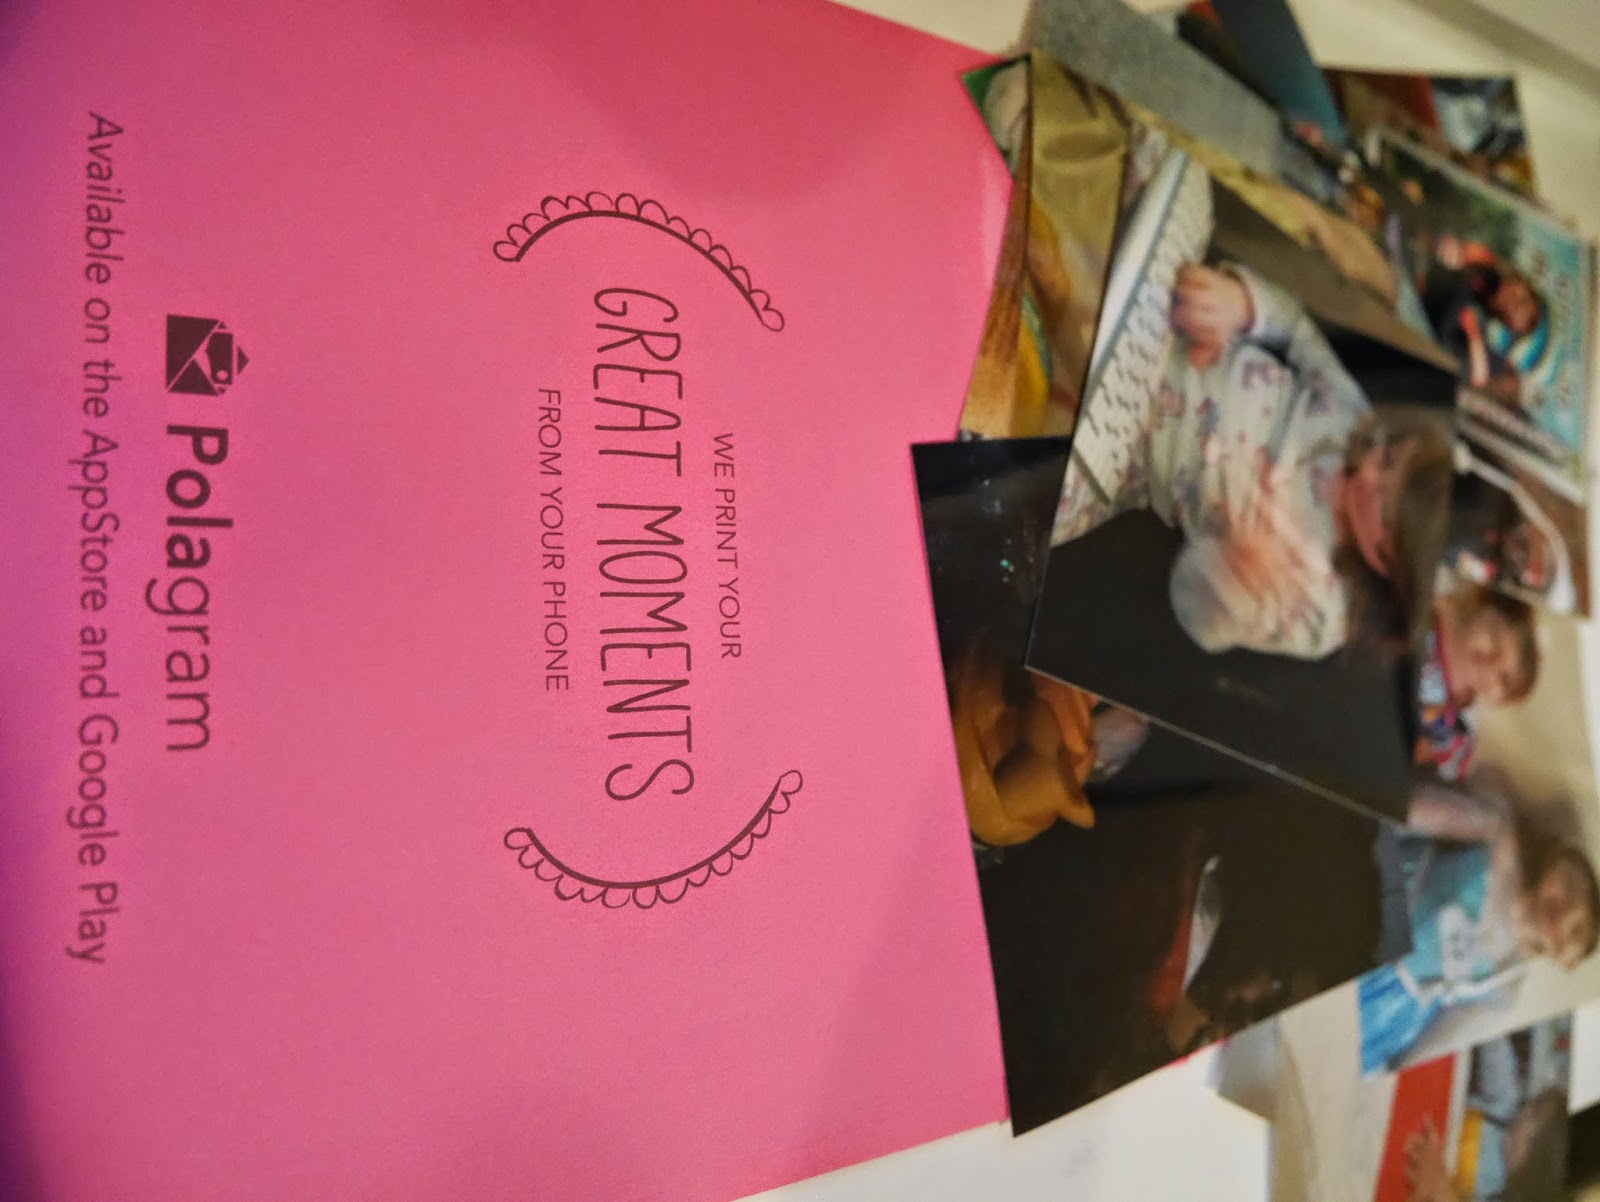 Polagram pink envelope and photo